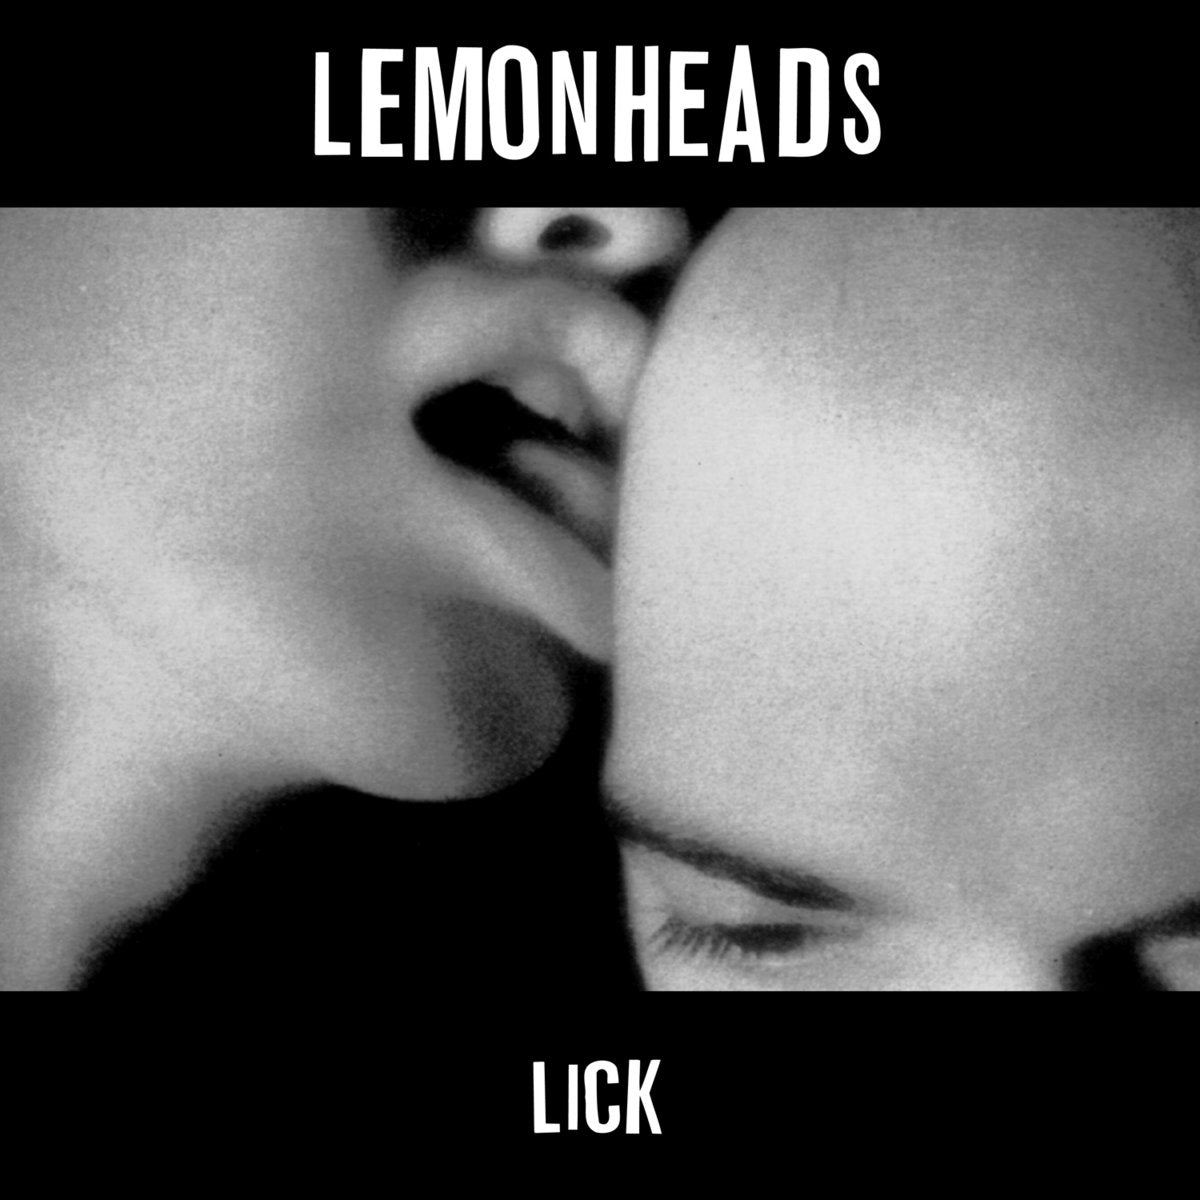 LEMONHEADS - LICK Vinyl LP